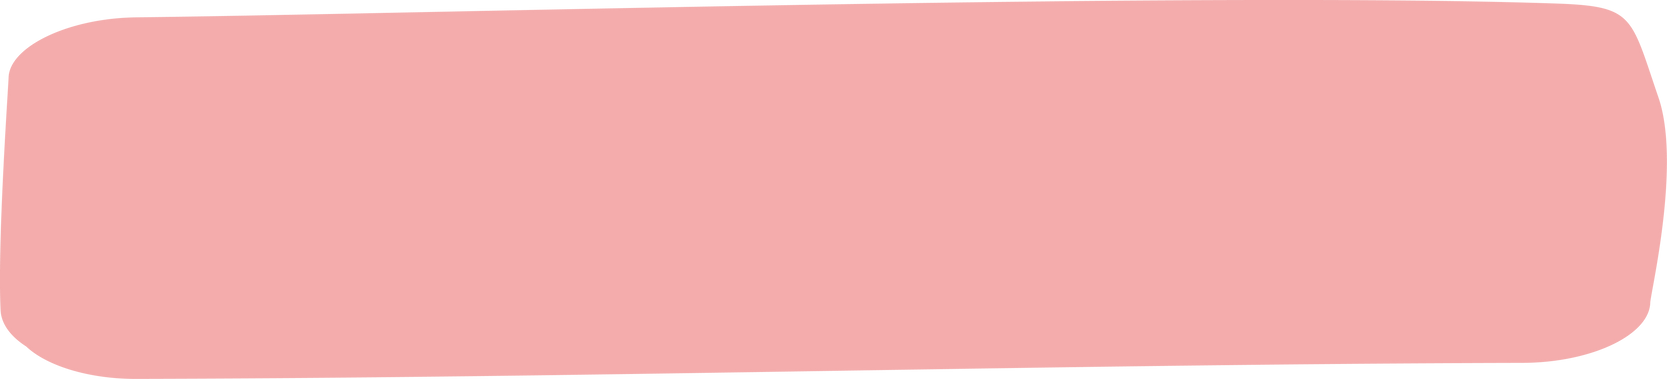 pink peach block rectangle textbox